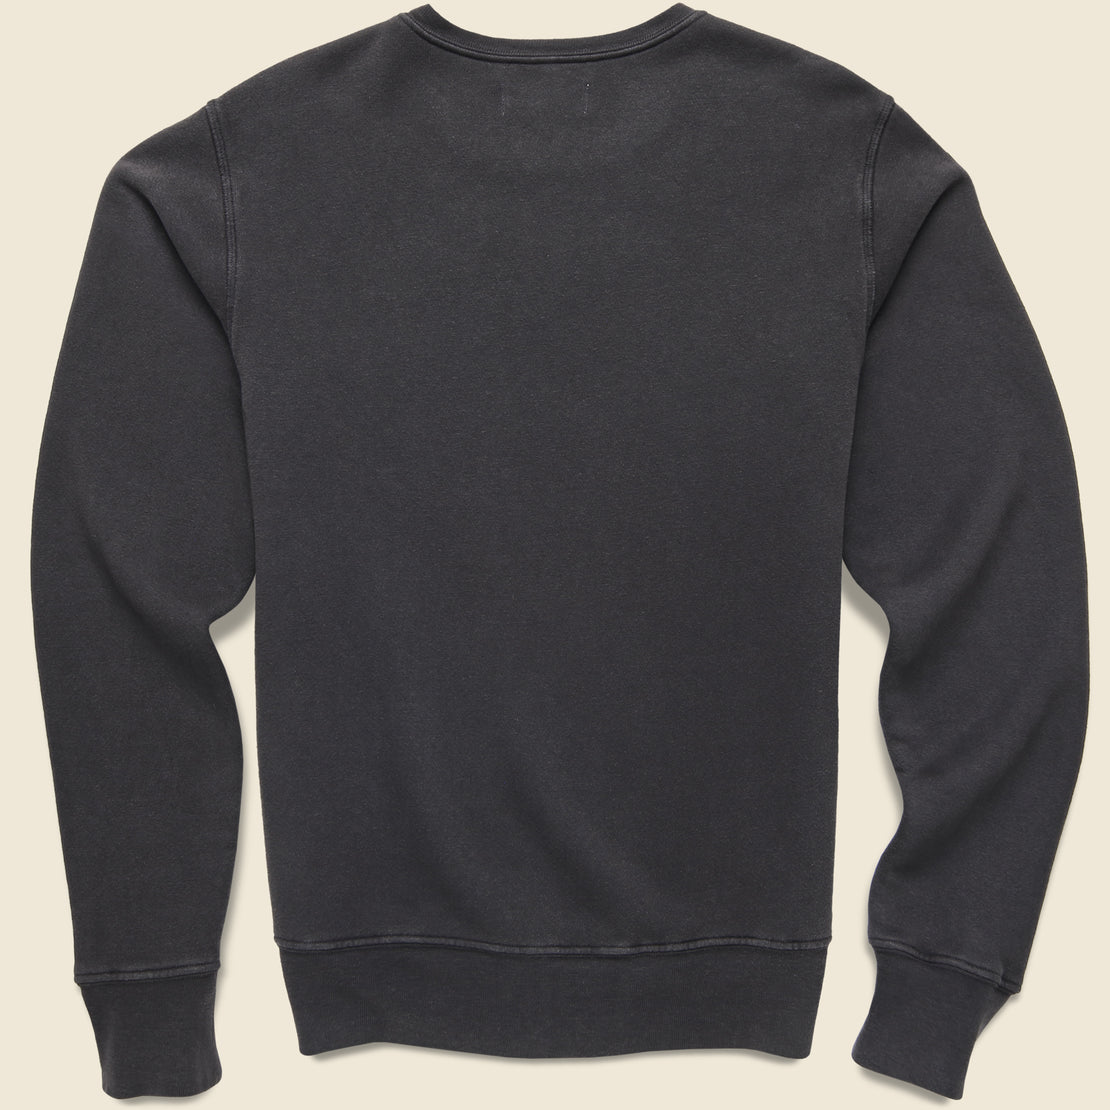 Bolt Sweatshirt - Black - Imogene + Willie - STAG Provisions - Tops - Fleece / Sweatshirt